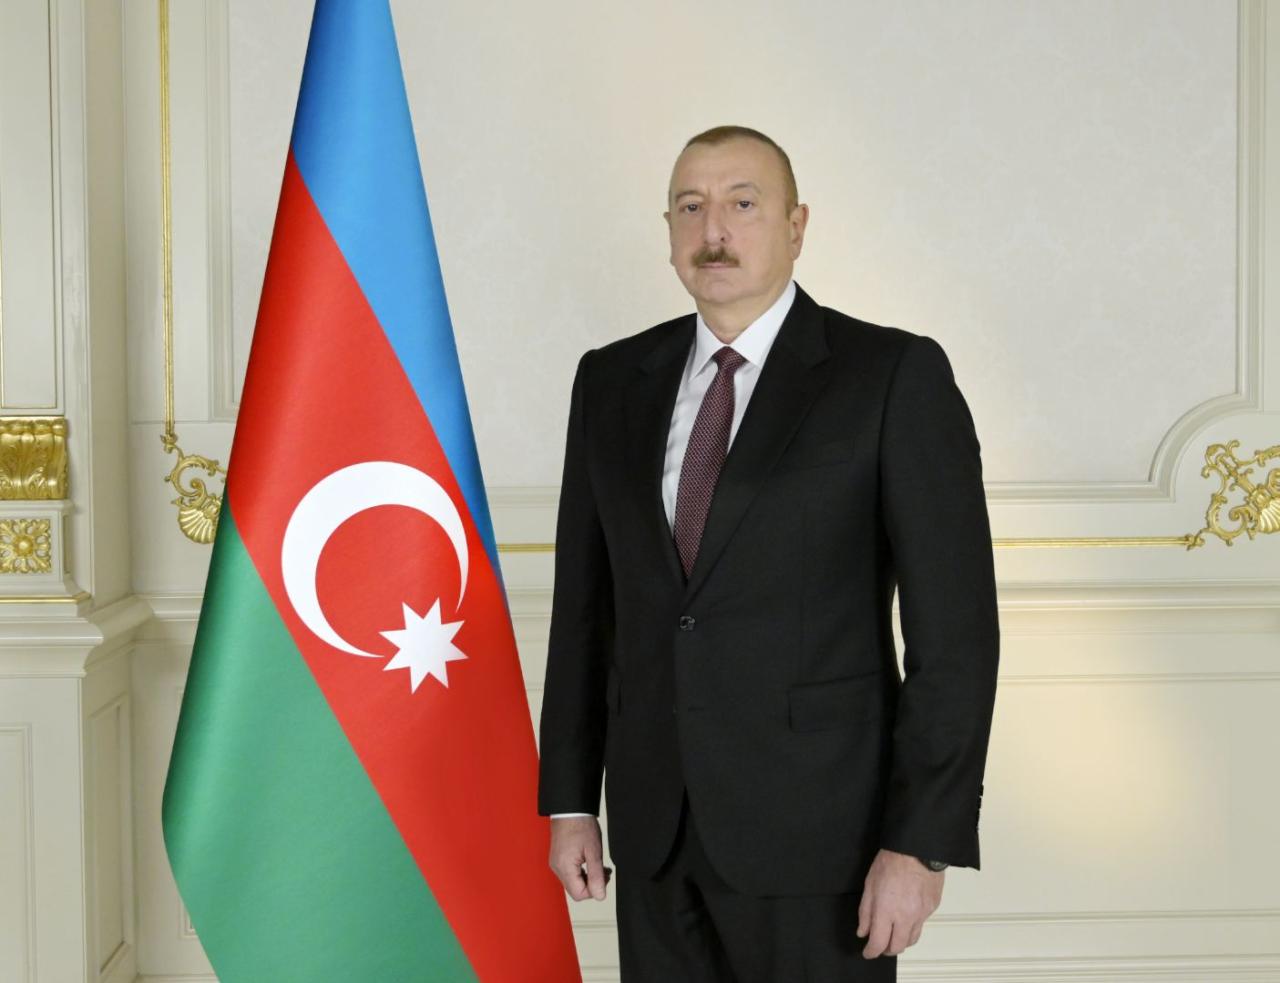 President Aliyev makes Facebook post on occasion of Novruz Holiday [PHOTO]